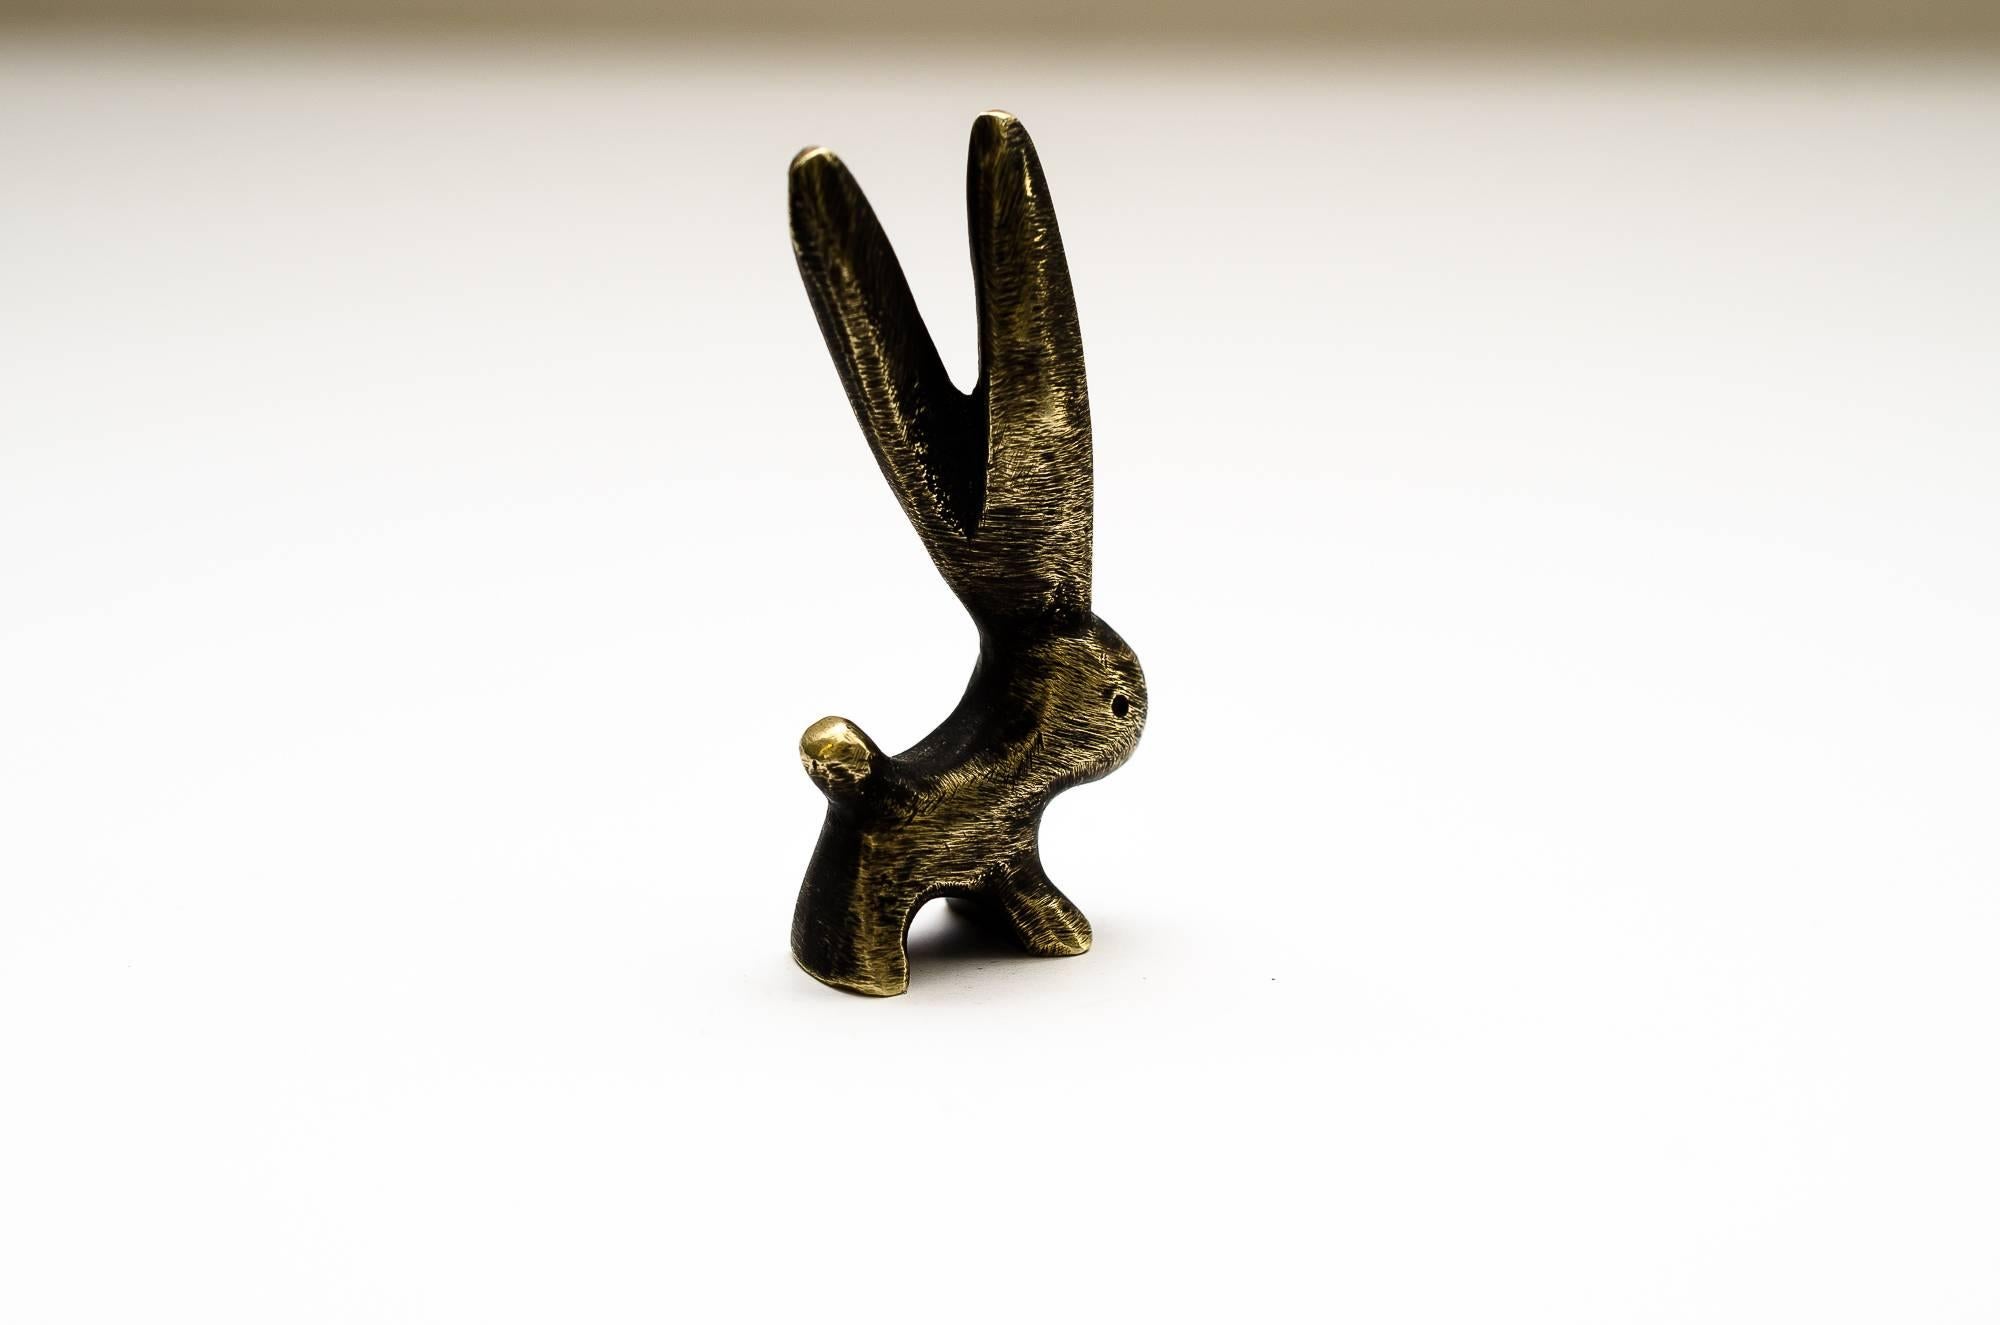 Small Rabbit by Walter Bosse
Original condition.